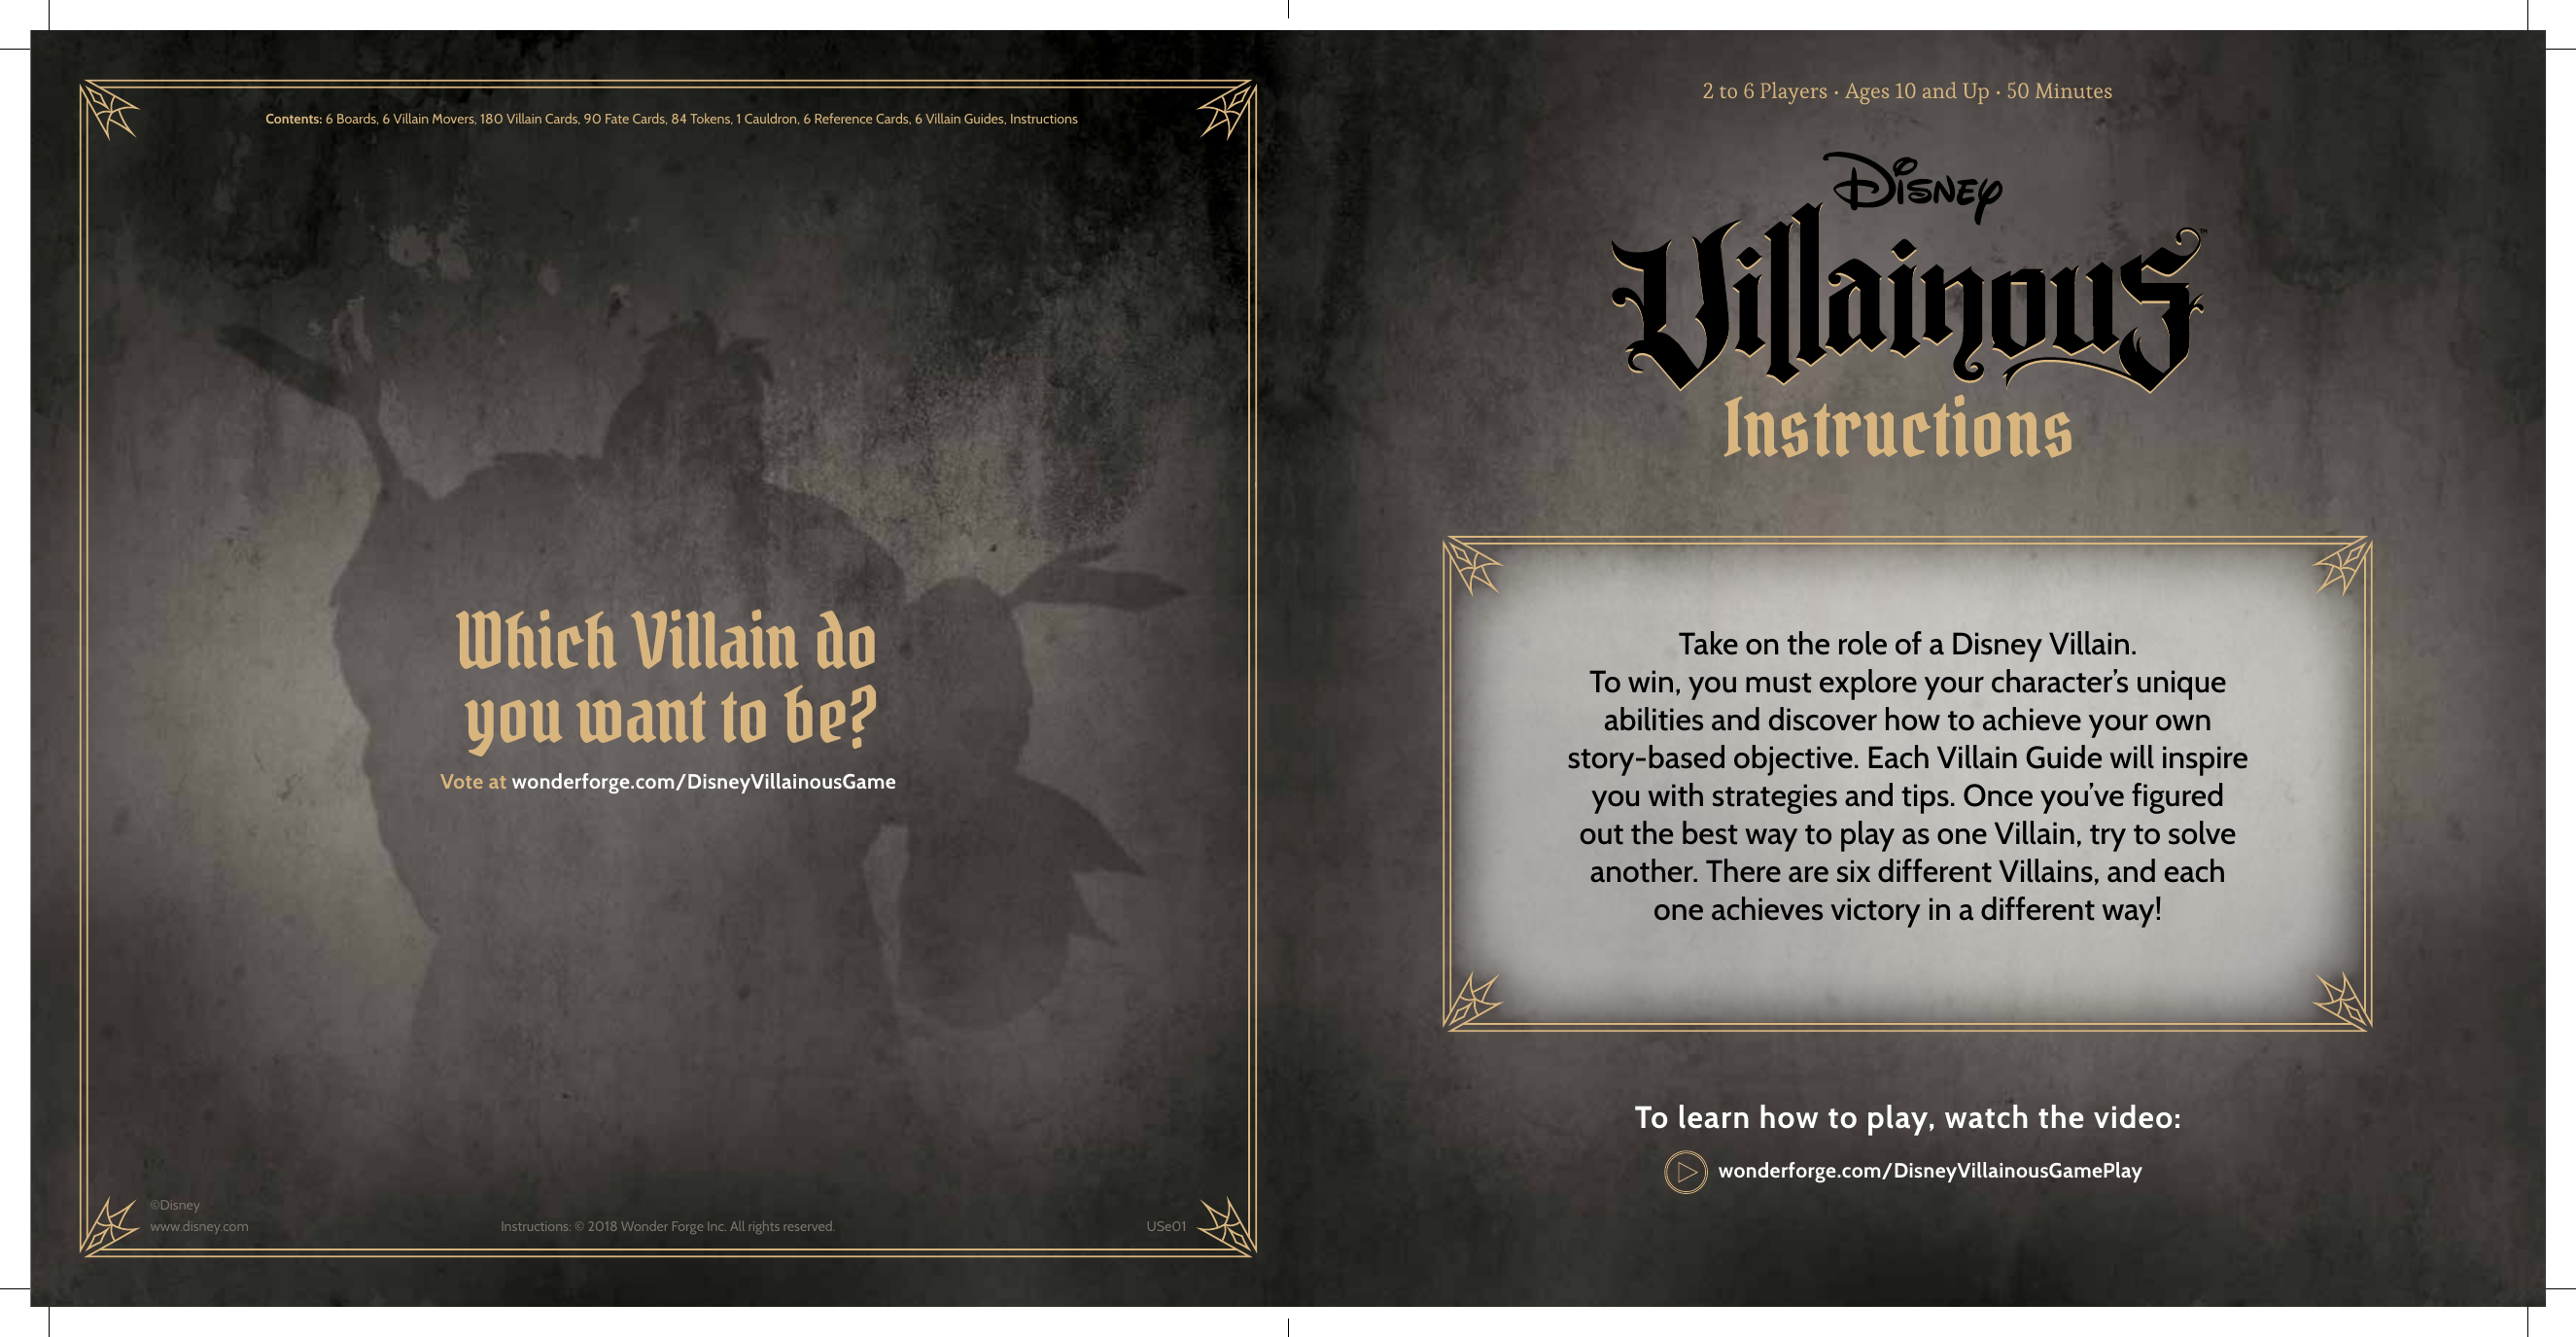 Page 1 of 6 - Disney Villainous Instructions